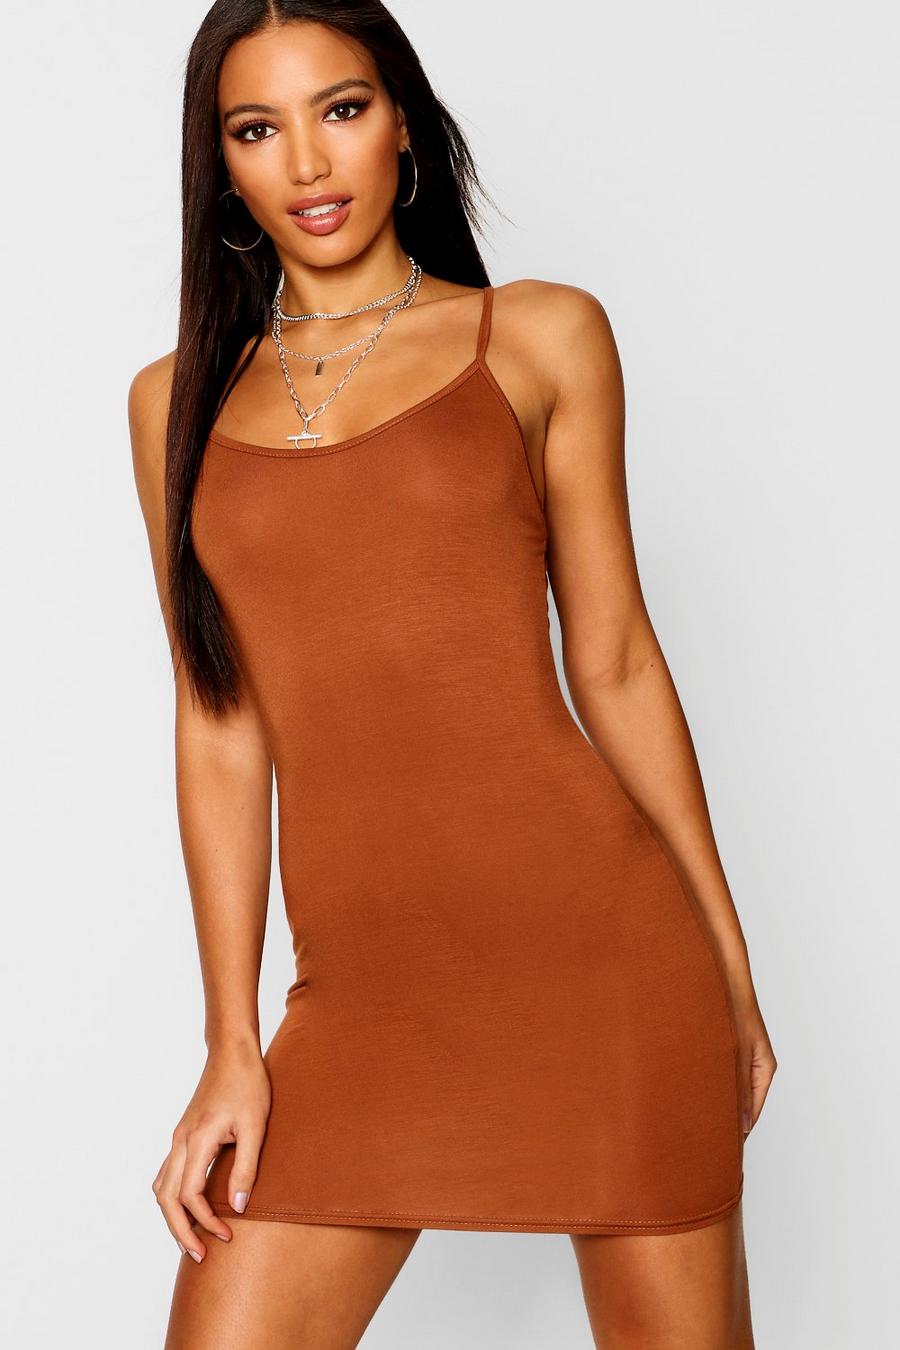 Tan brown Basic Strappy Cami Bodycon Dress